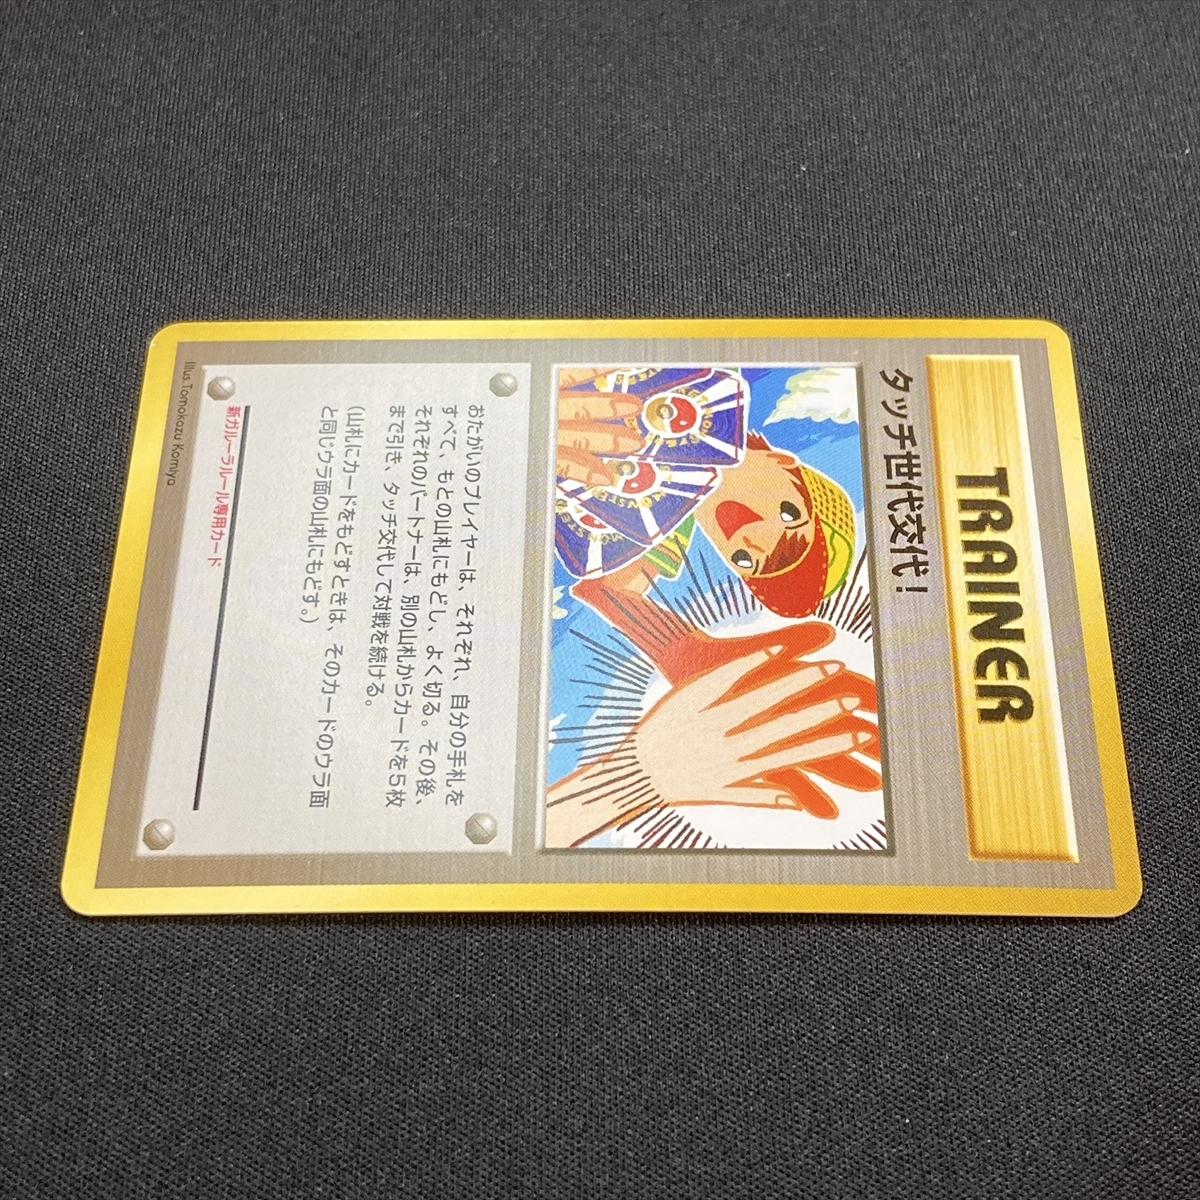 Touch Generational Change Promo Pokemon Card Japanese Nintendo トレーナー タッチ世代交代 プロモ ポケモン カード_画像3